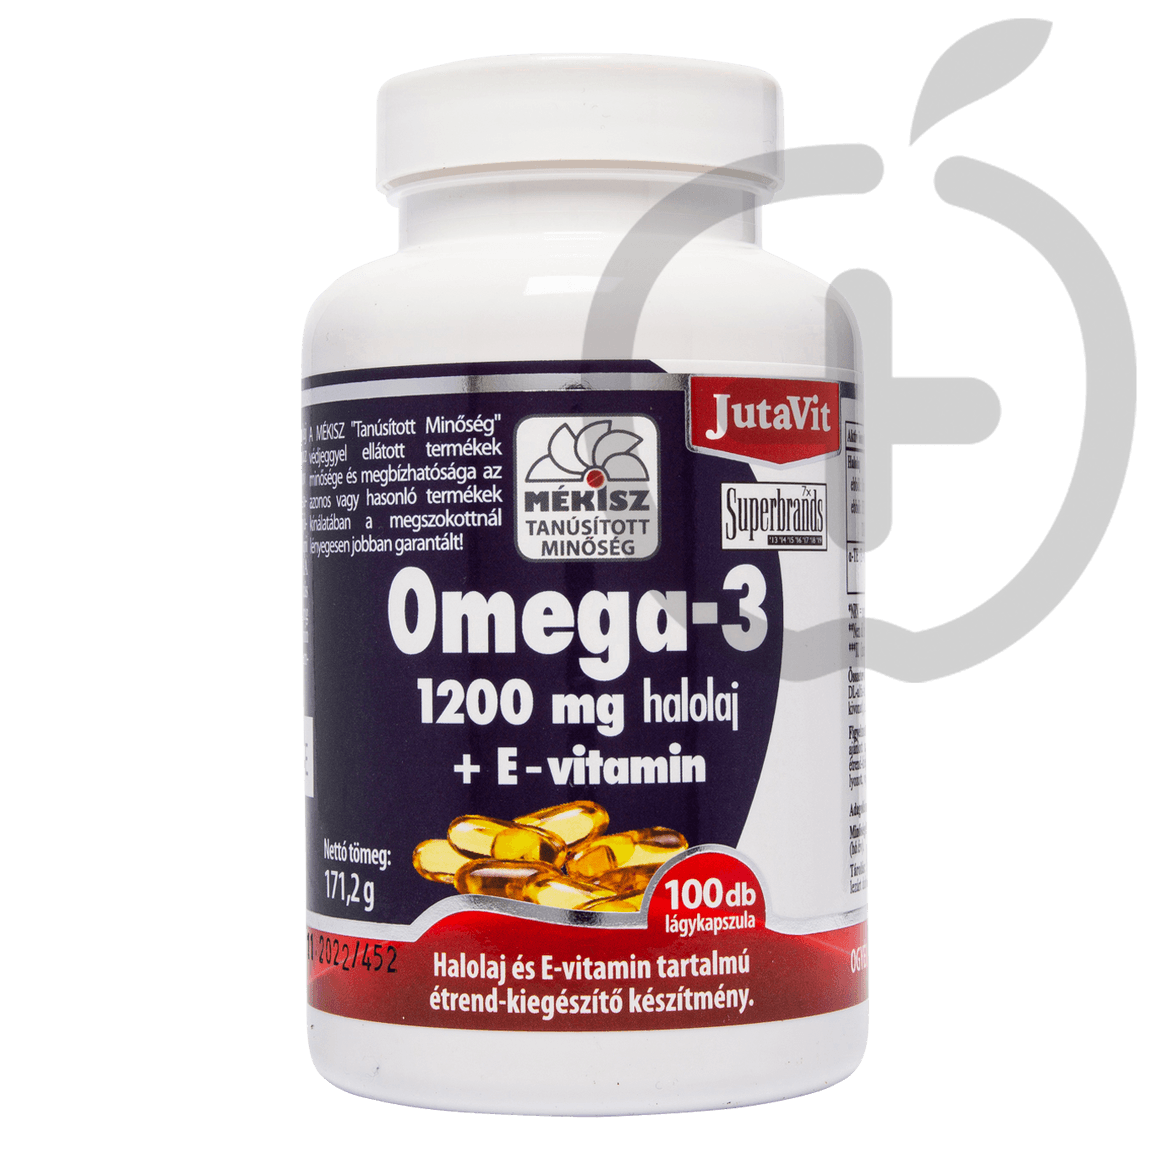 Jutavit Omega-3 halolaj 1200 mg kapszula